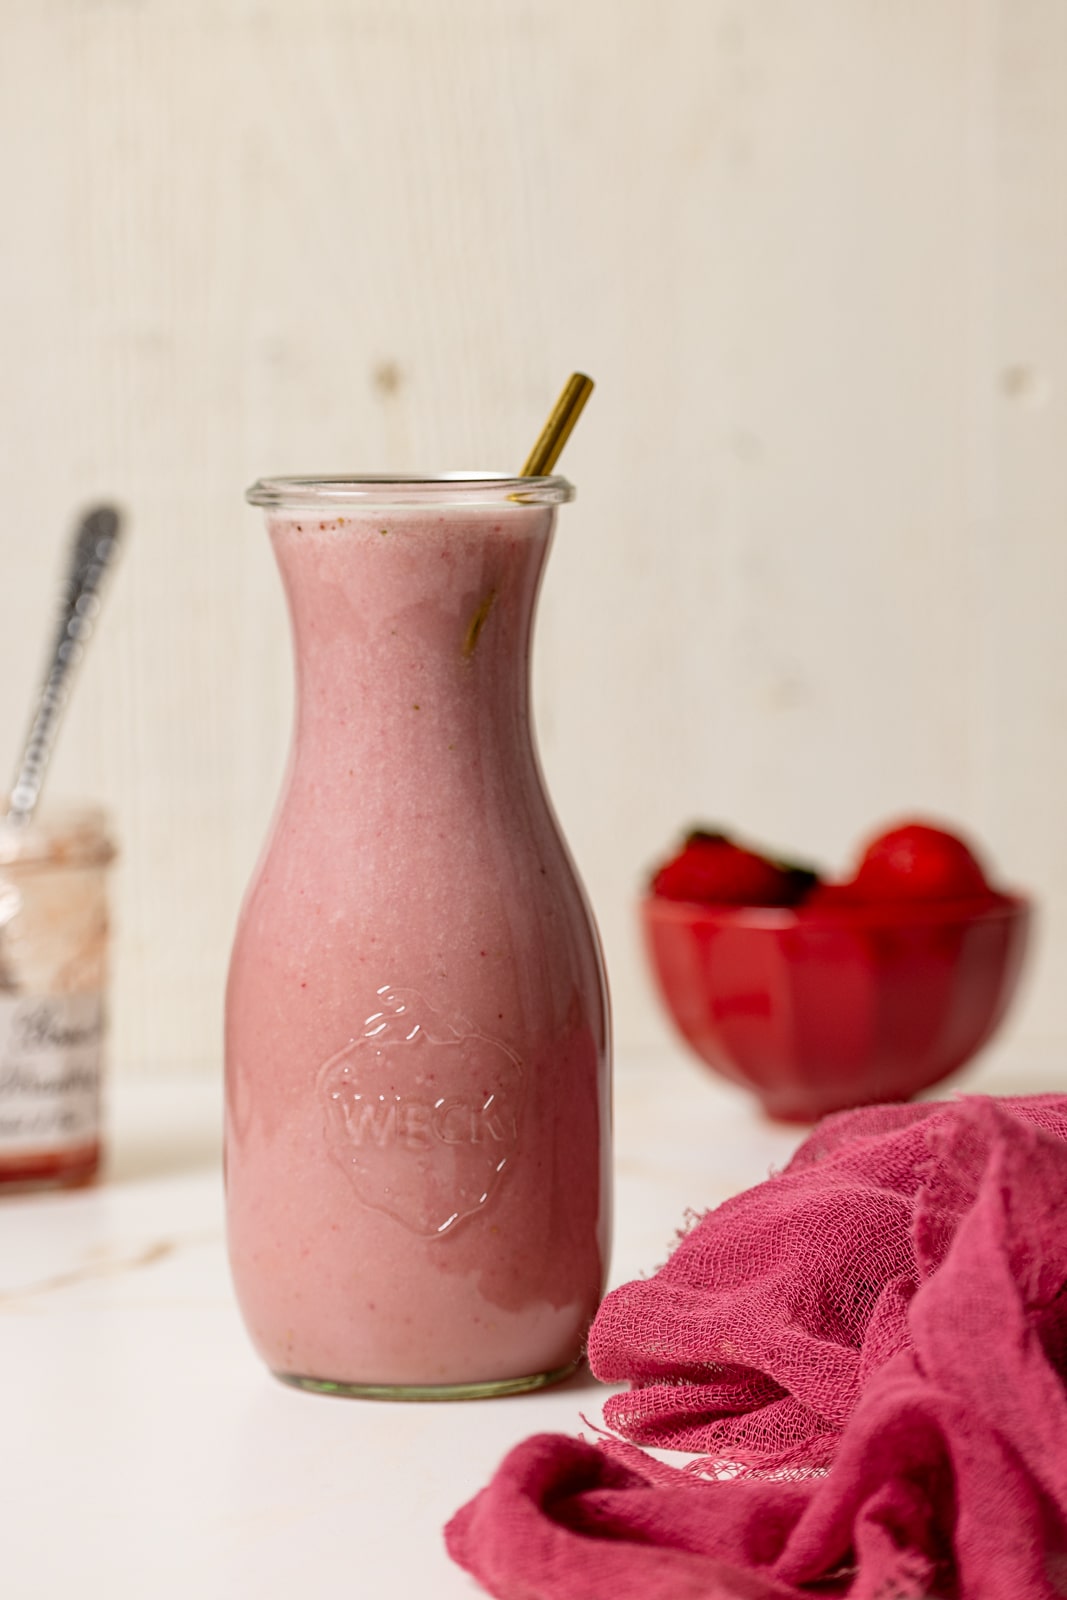 Strawberry milk in a jar with a straw.